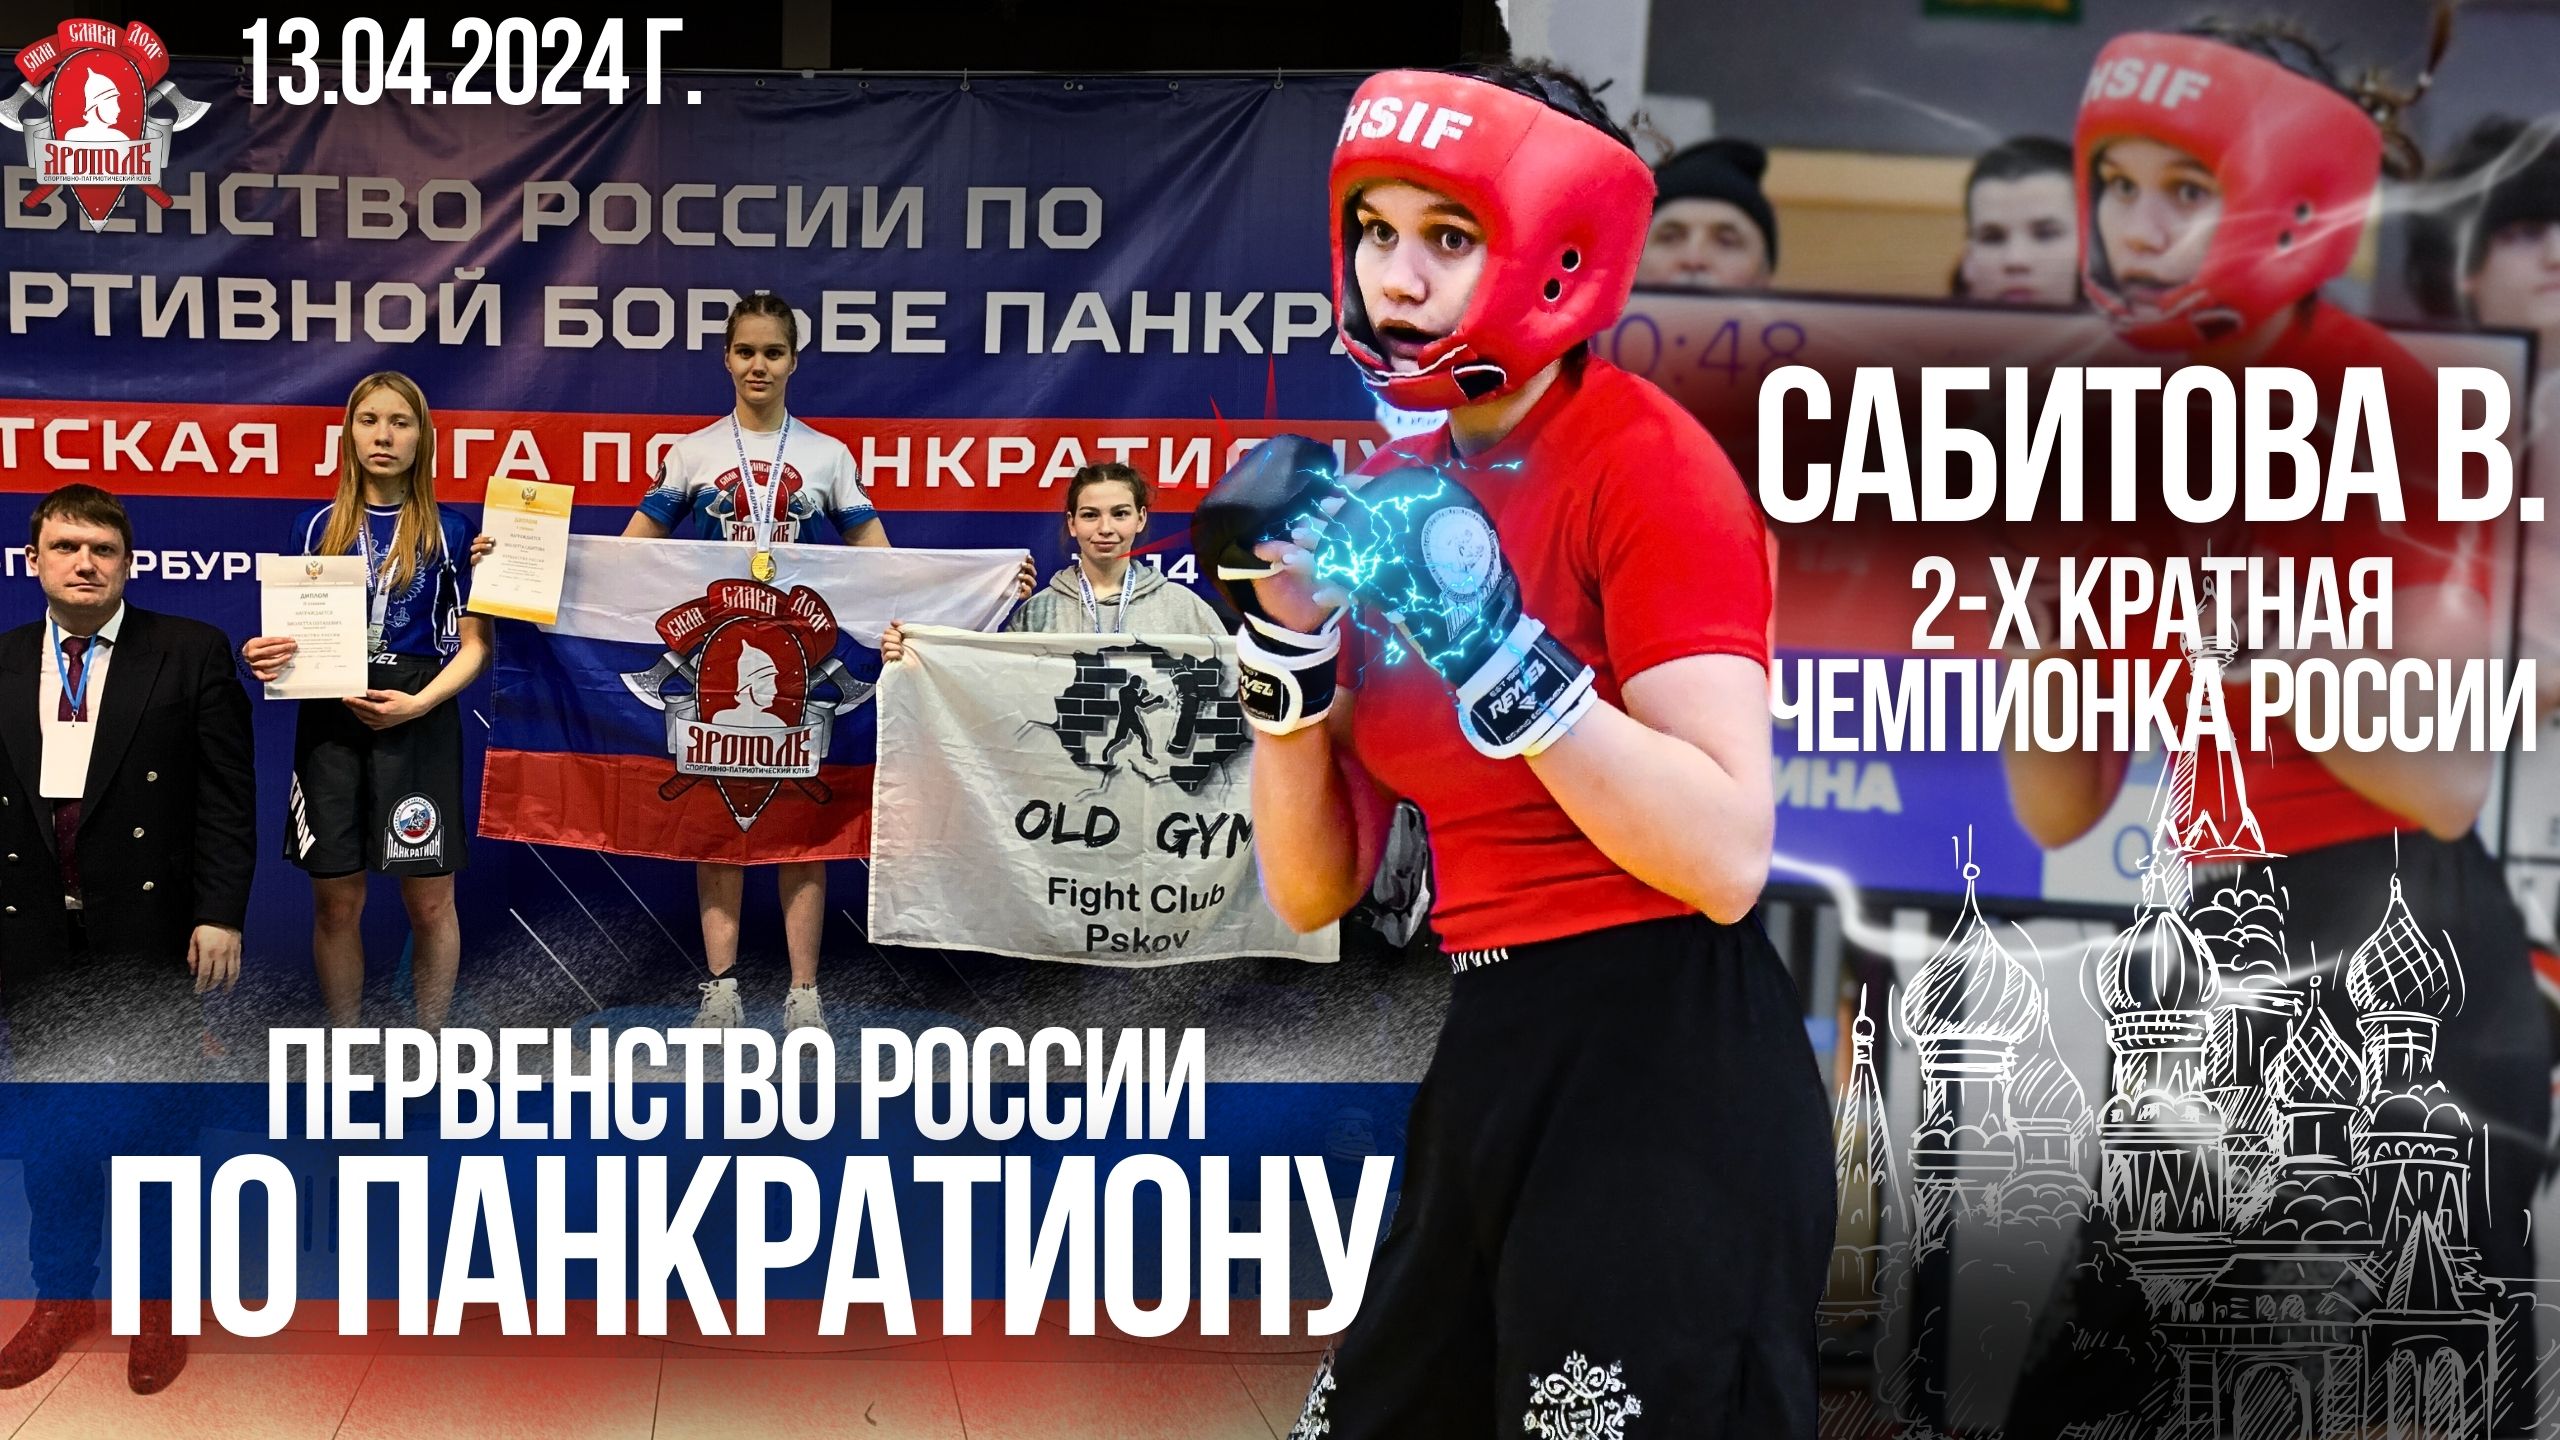 Бокс россия юноши 15 16 2024